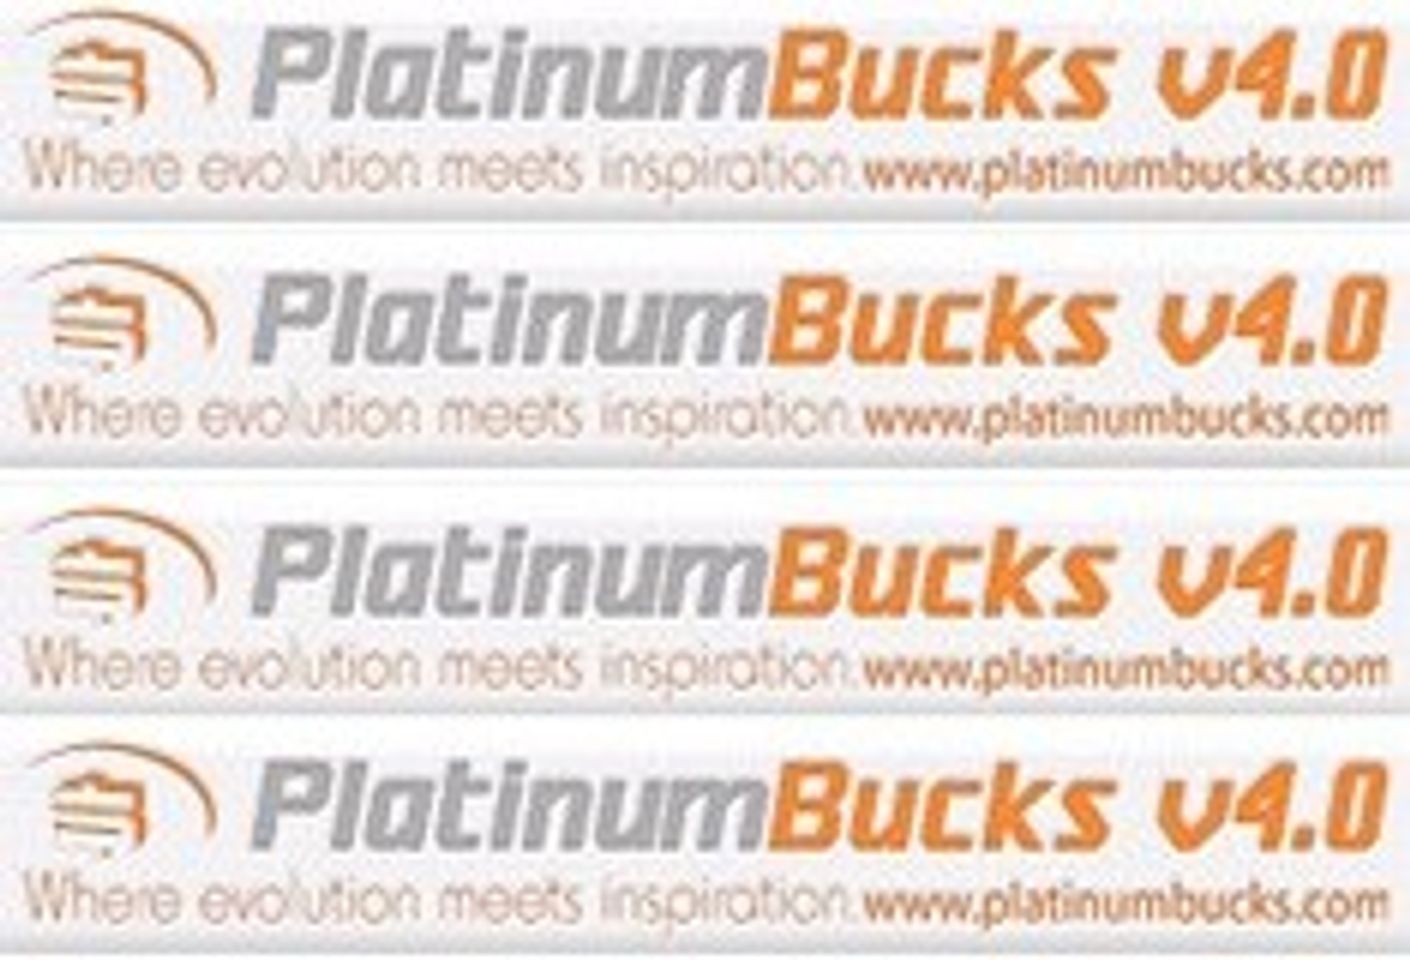 Platinum Bucks Launches Discount Disco $50 Weekends